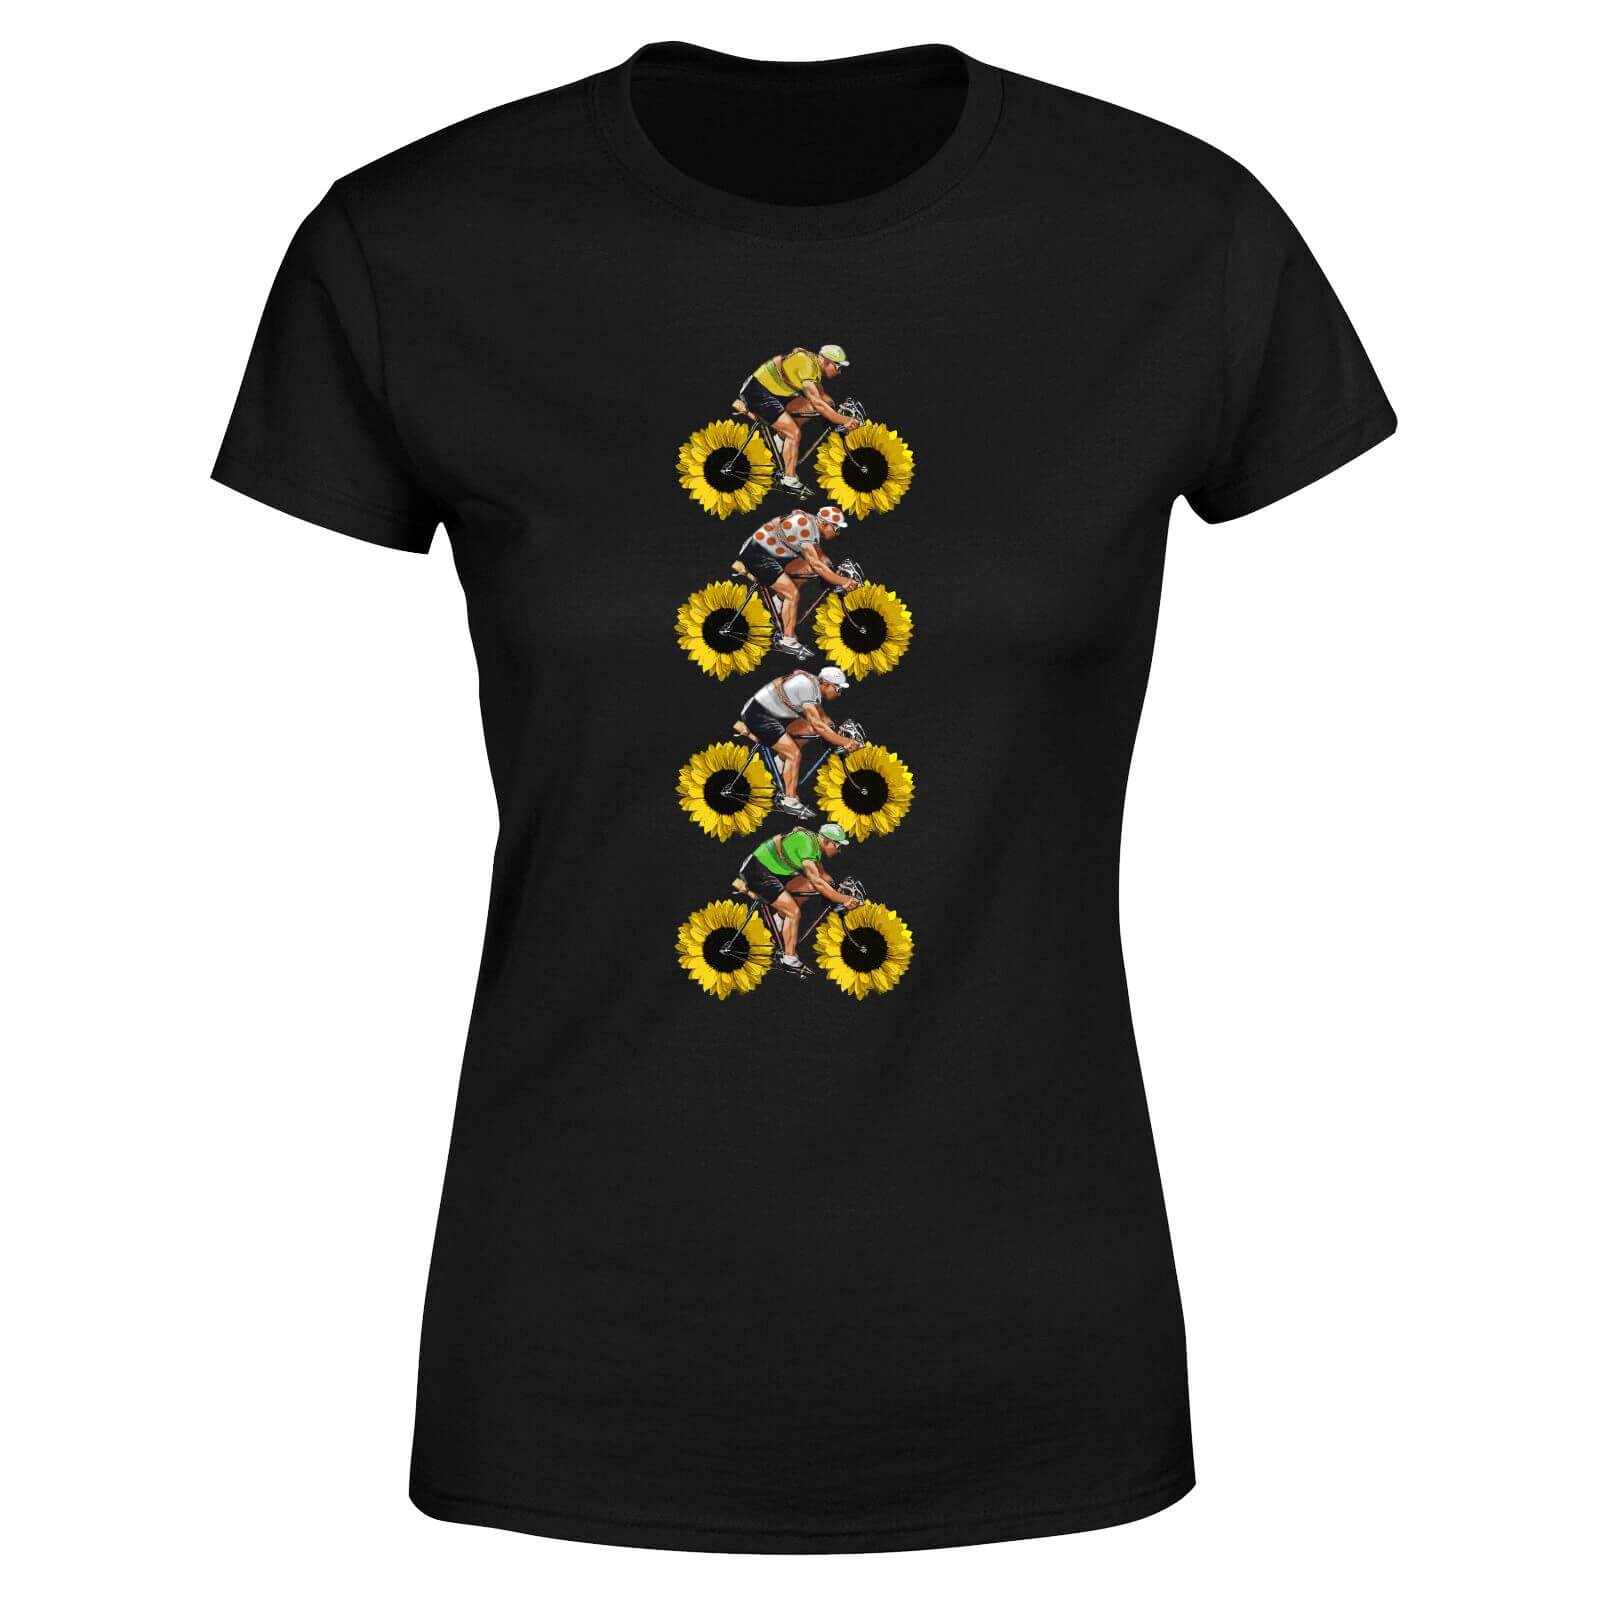 Tournesol Riders Women's T-Shirt - Black - XS - Black